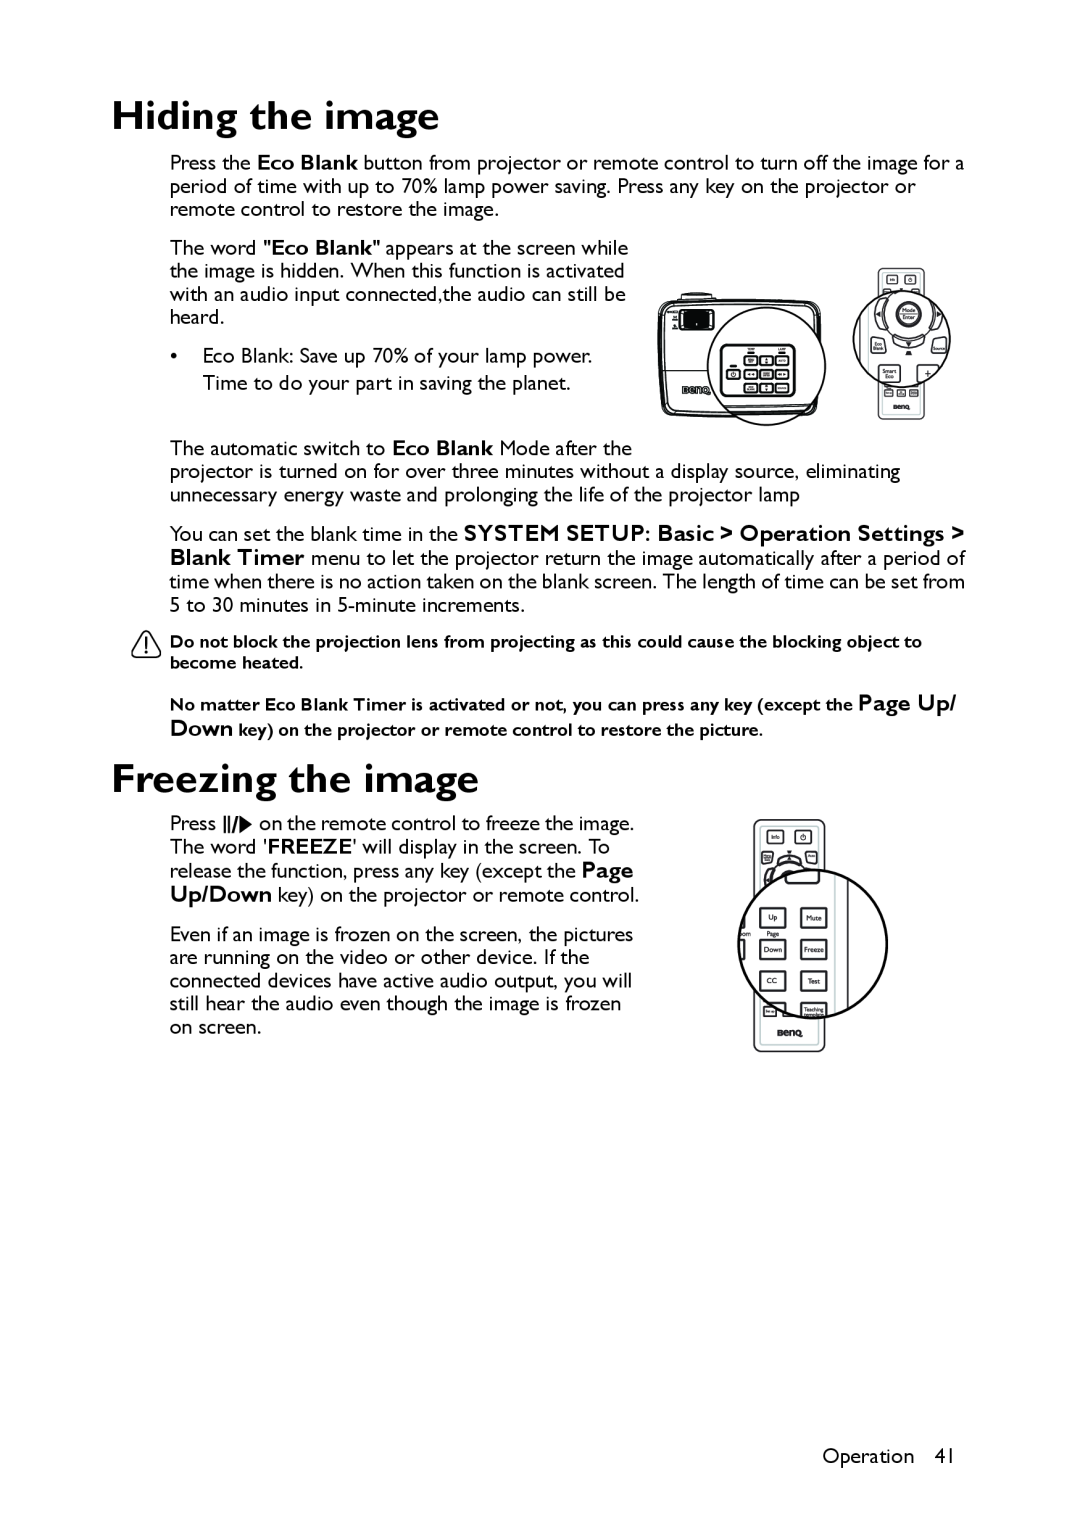 BenQ MS521 user manual Hiding the image, Freezing the image 